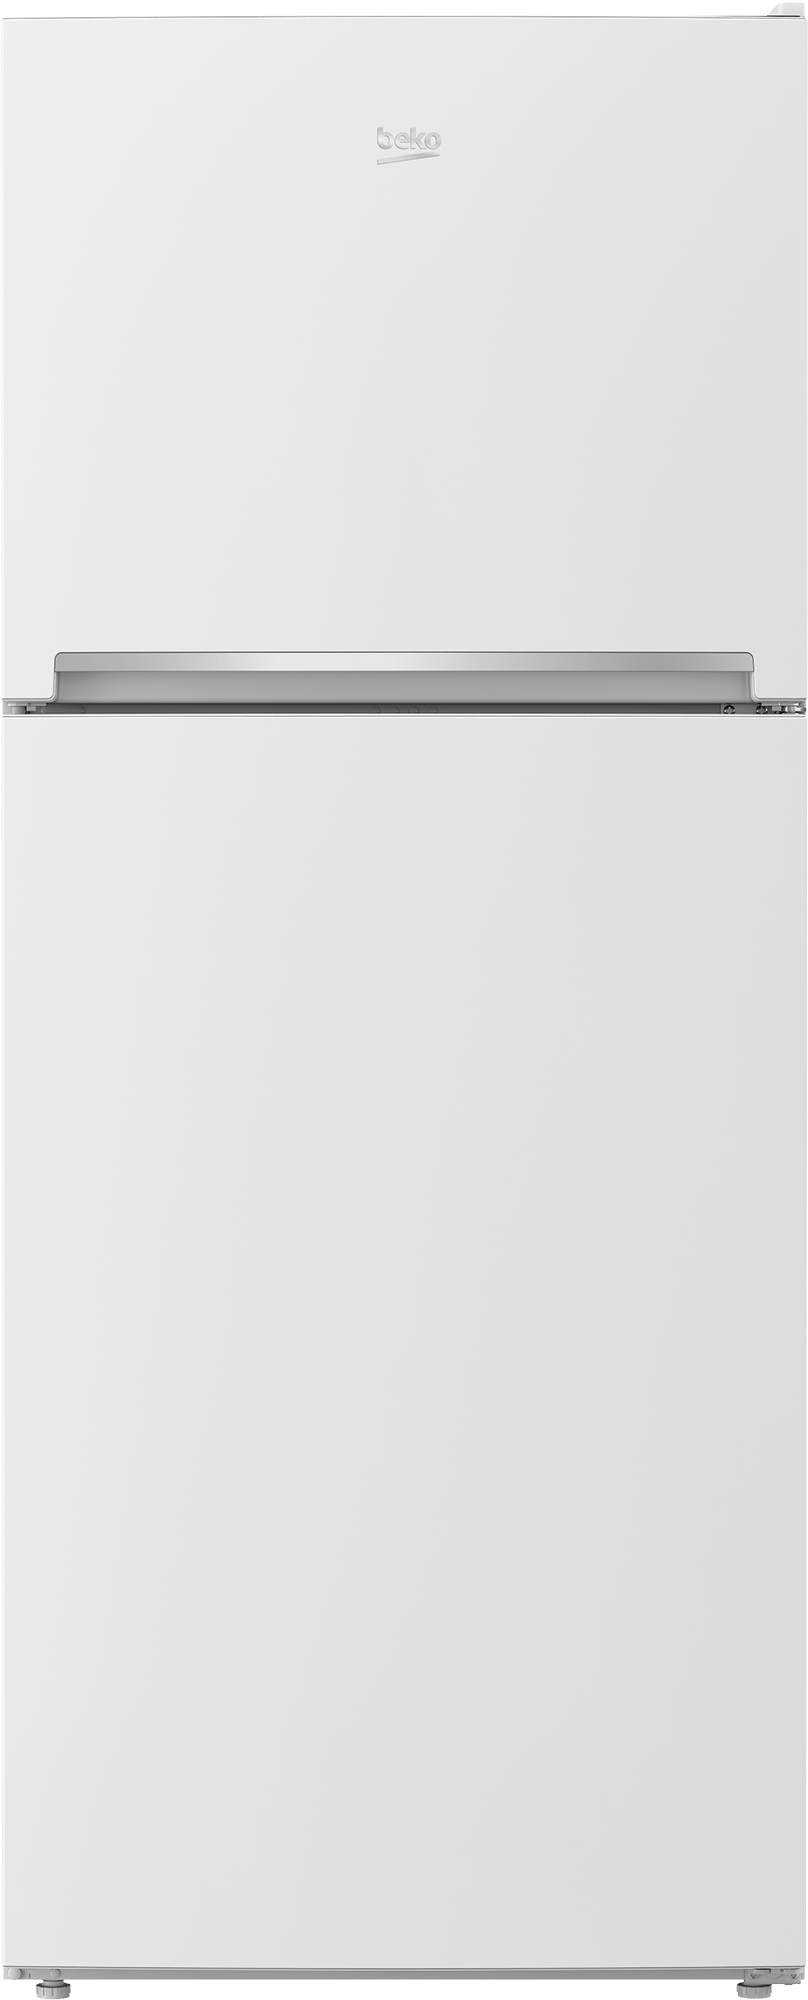 Beko 28" Freezer Top White Refrigerator with Auto Ice Maker